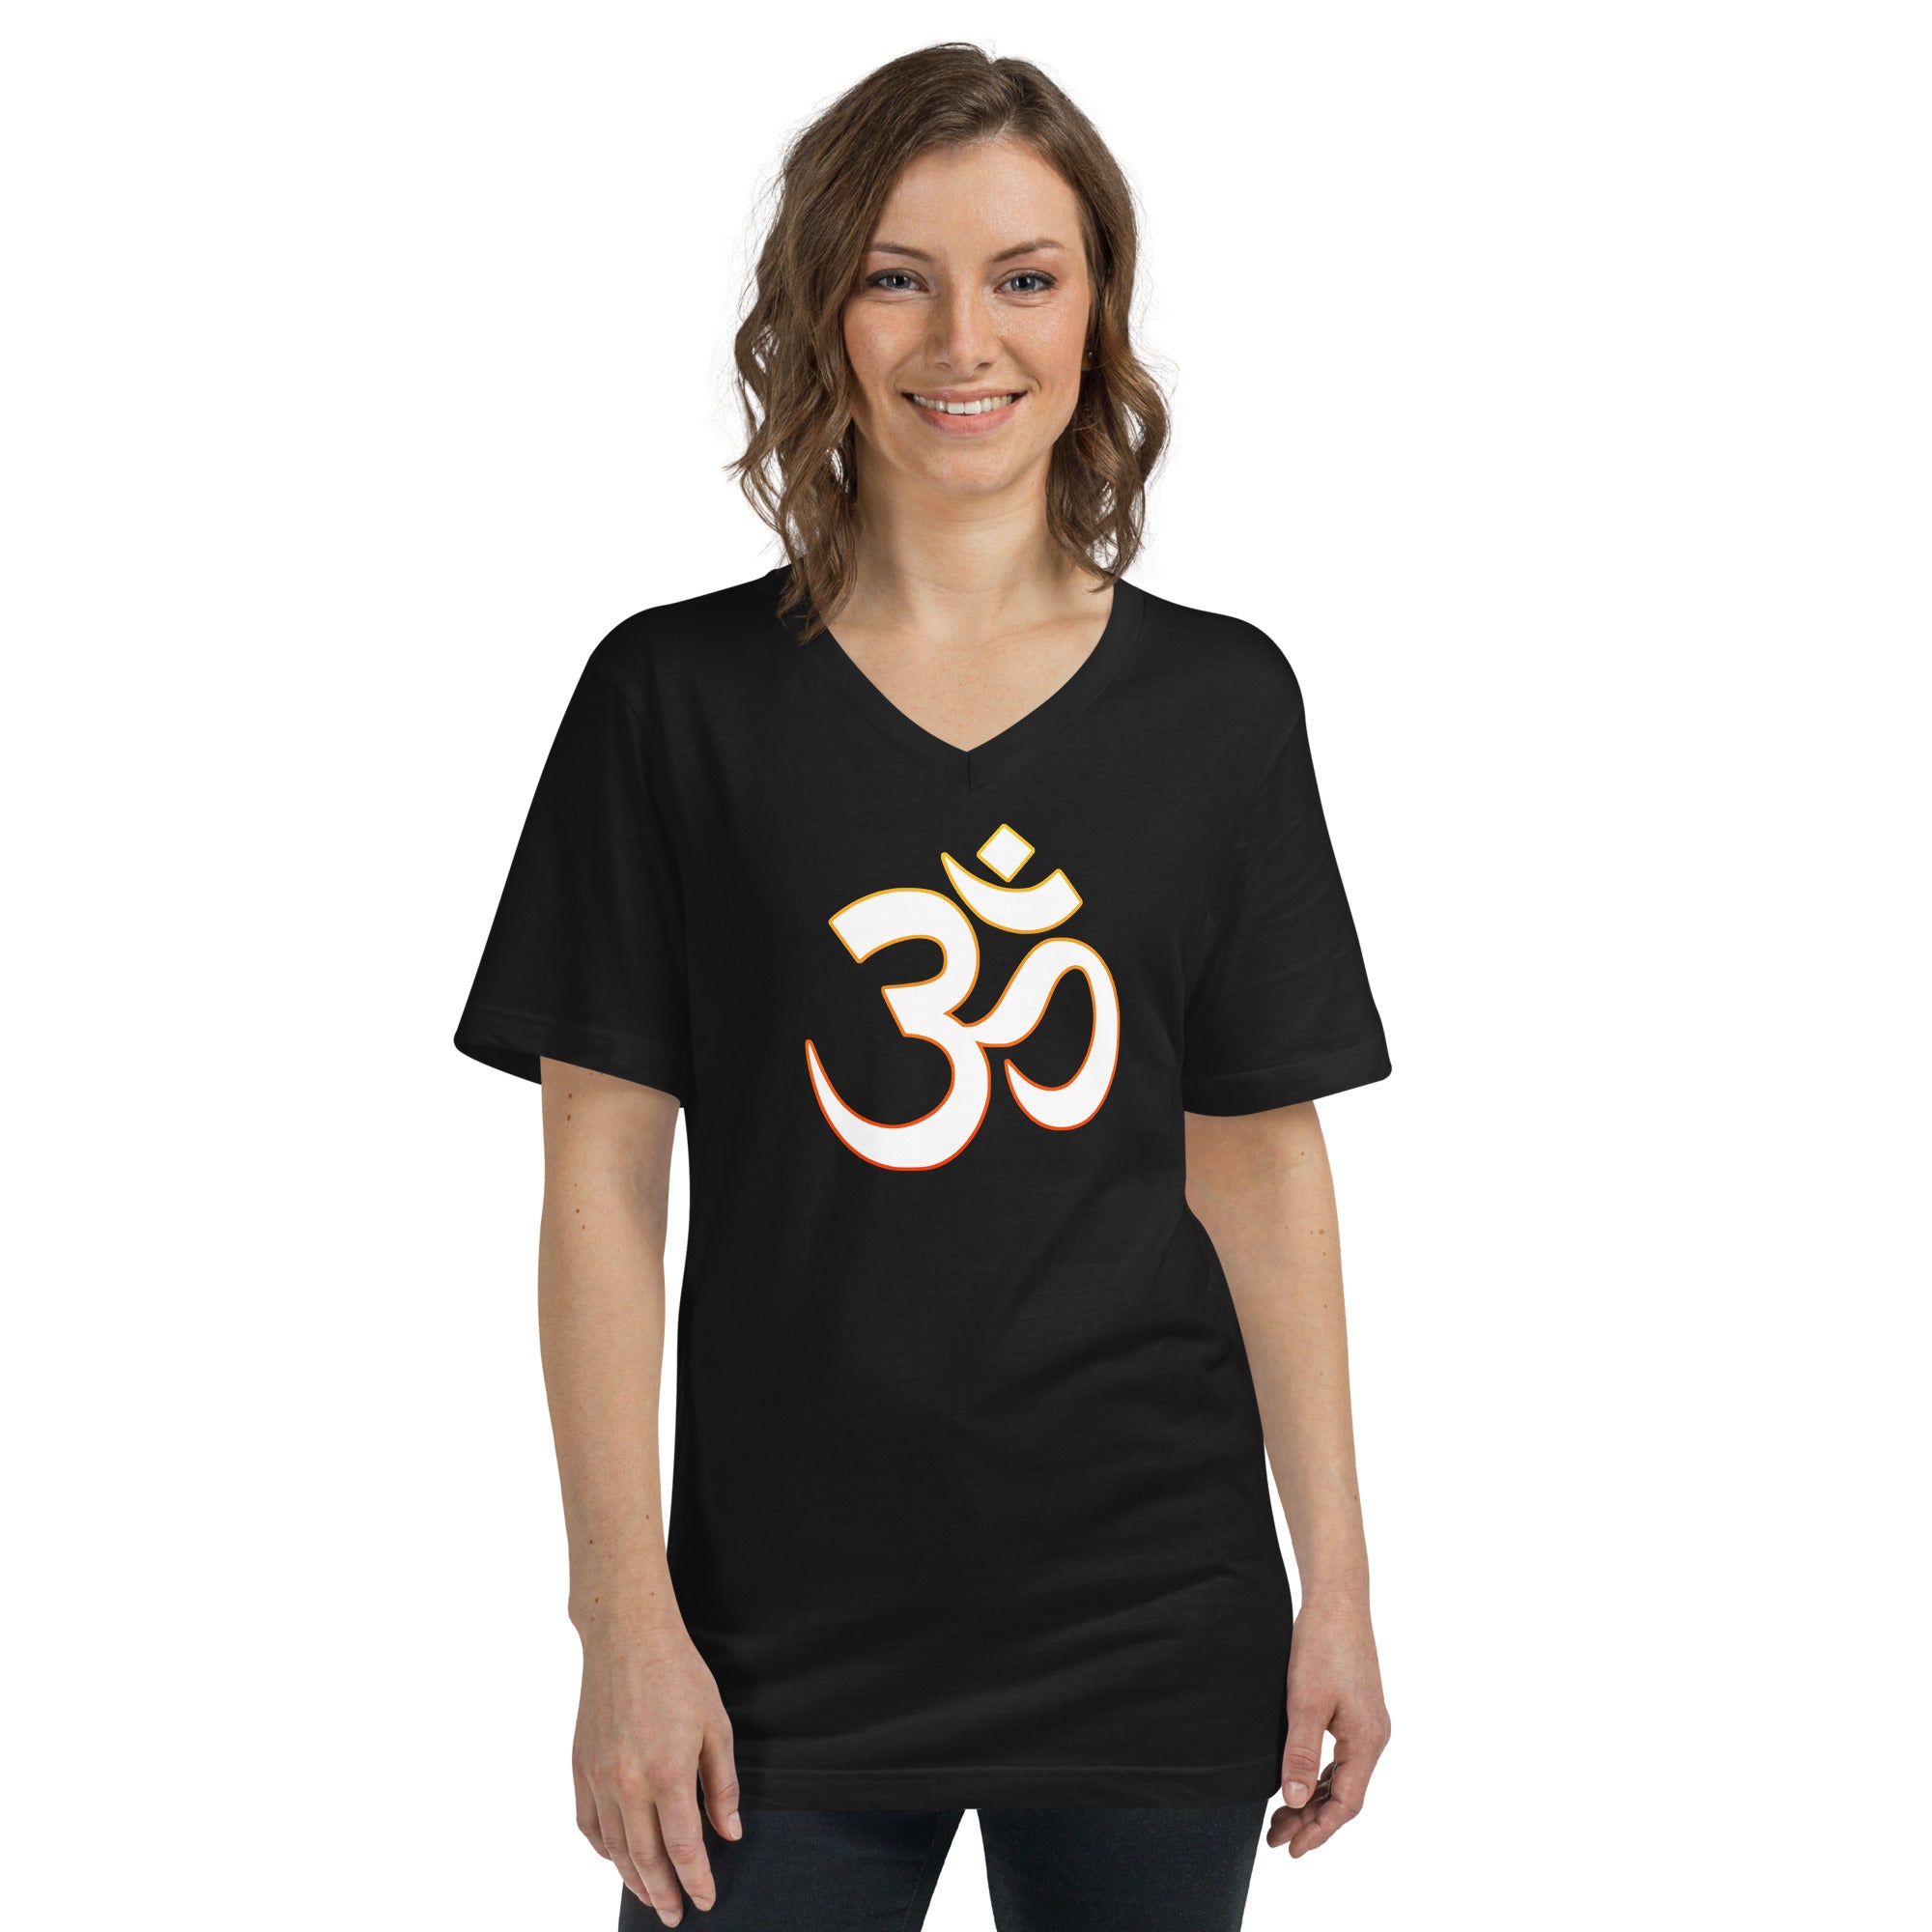 OM Sacred Spiritual Vibration of the Universe Short Sleeve V-Neck T-Shirt